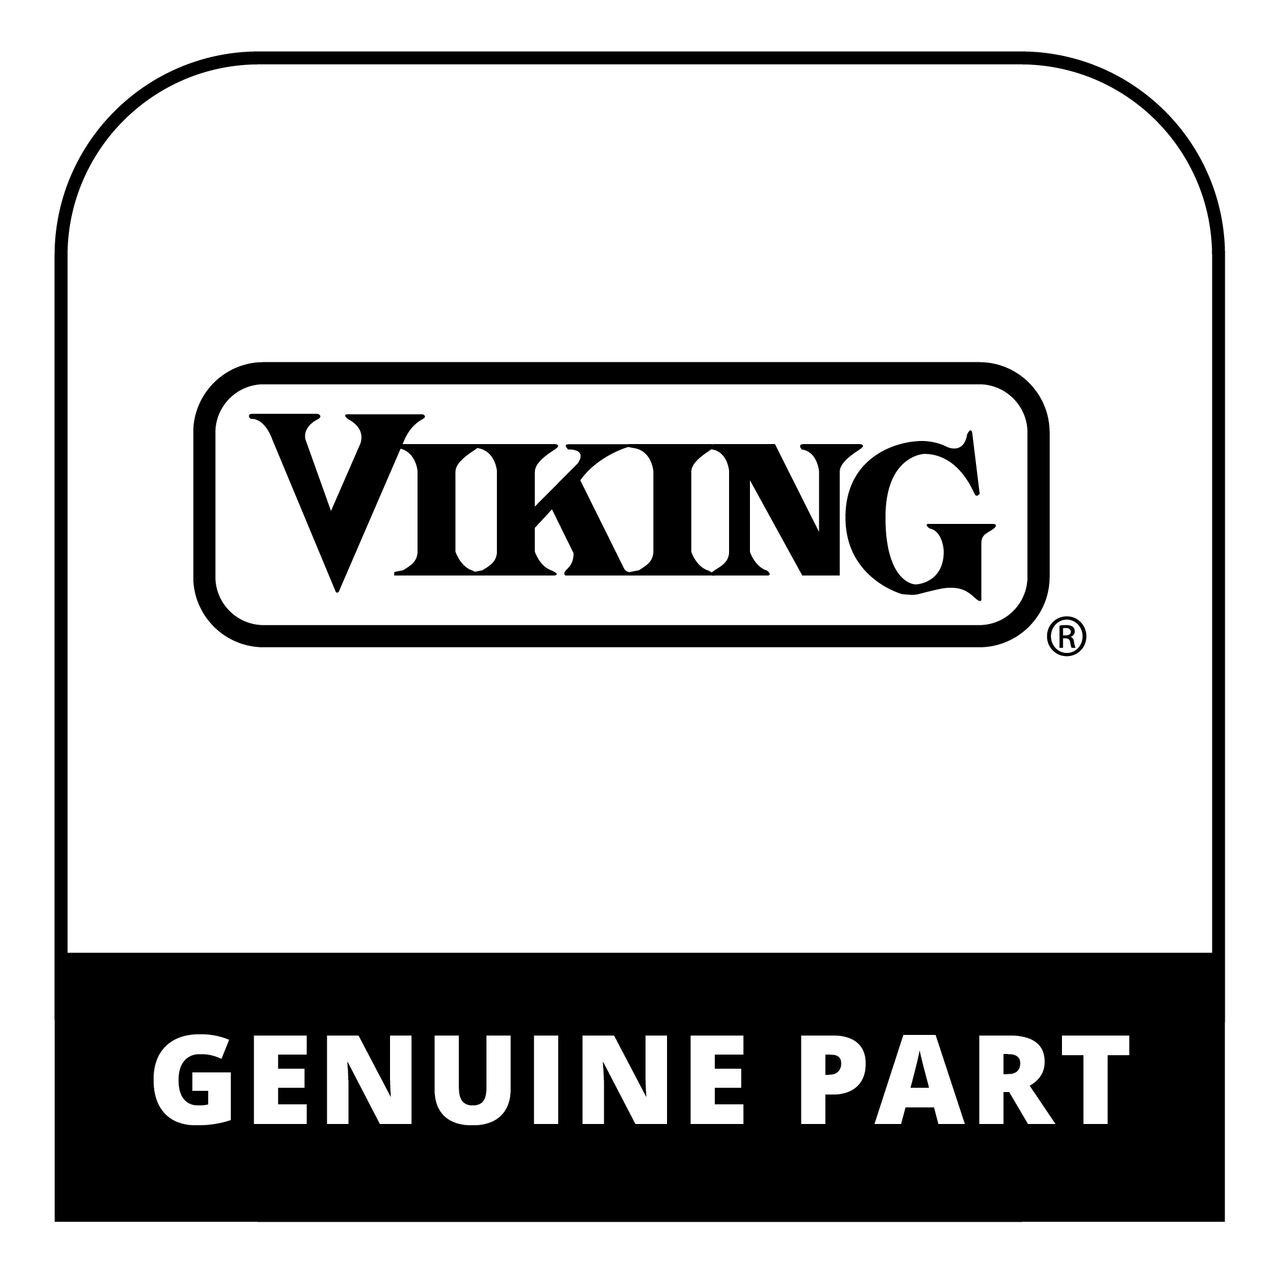 Viking 070403-000 - HINGE RIGHT ASSEMBLY - Genuine Viking Part